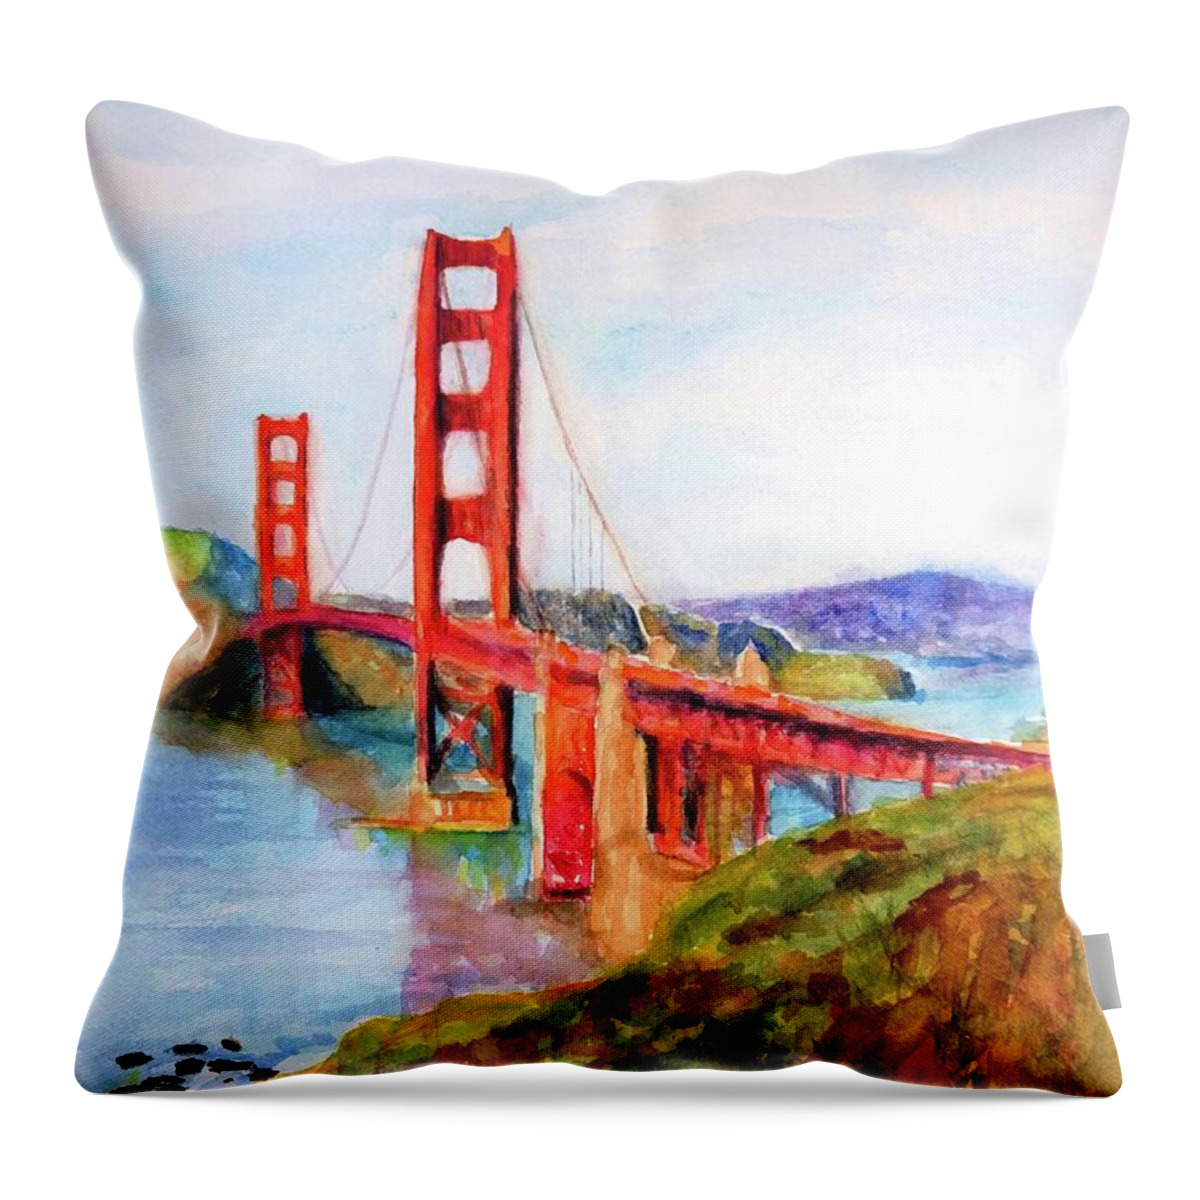 Golden Gate Bridge Throw Pillow featuring the painting San Francisco Golden Gate Bridge Impressionism by Carlin Blahnik CarlinArtWatercolor